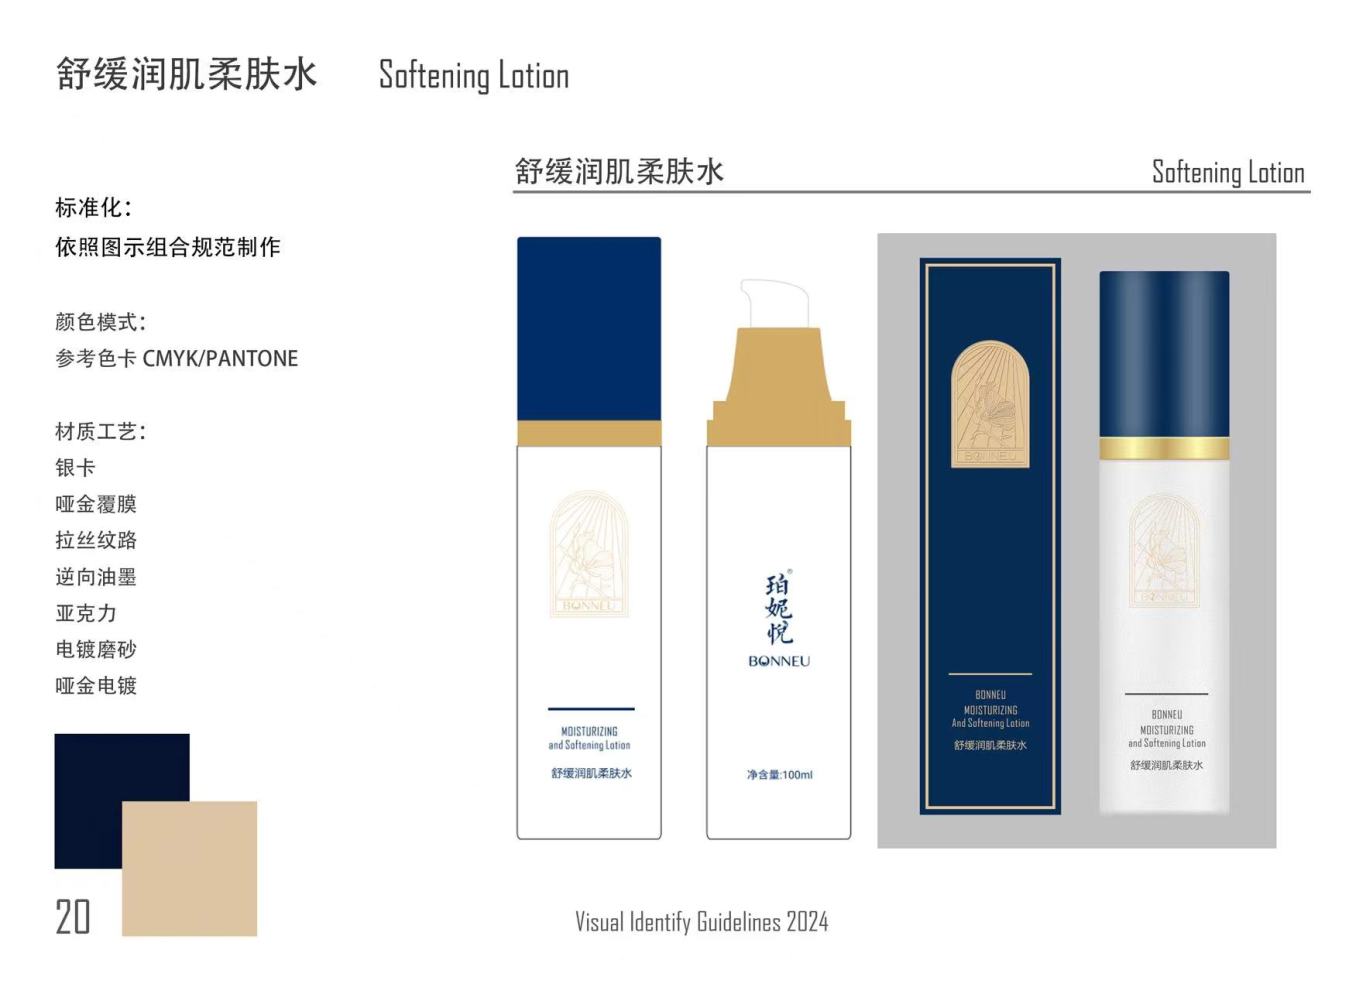 BONNEU国姿铂妮悦 民族护肤品牌 包装设计及品牌策划图19